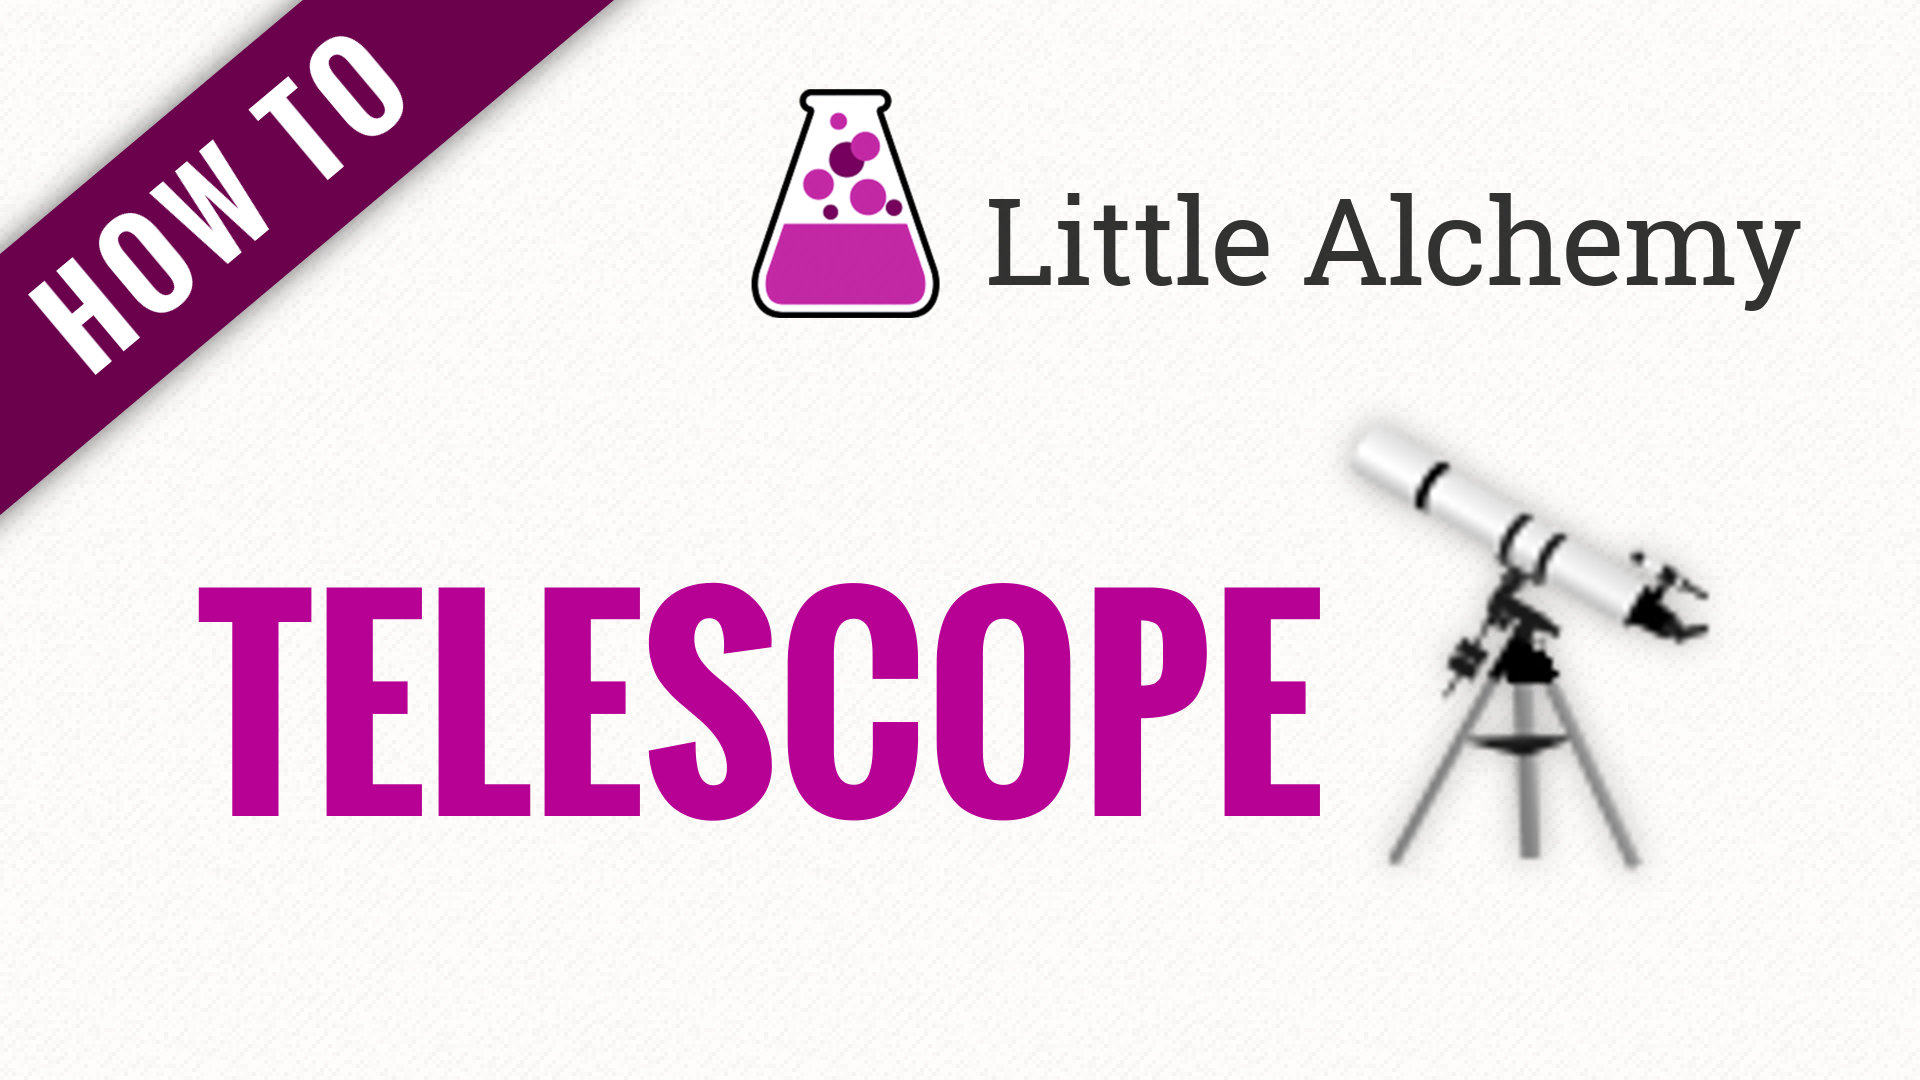 Matrix ademen engel telescope - Little Alchemy Cheats